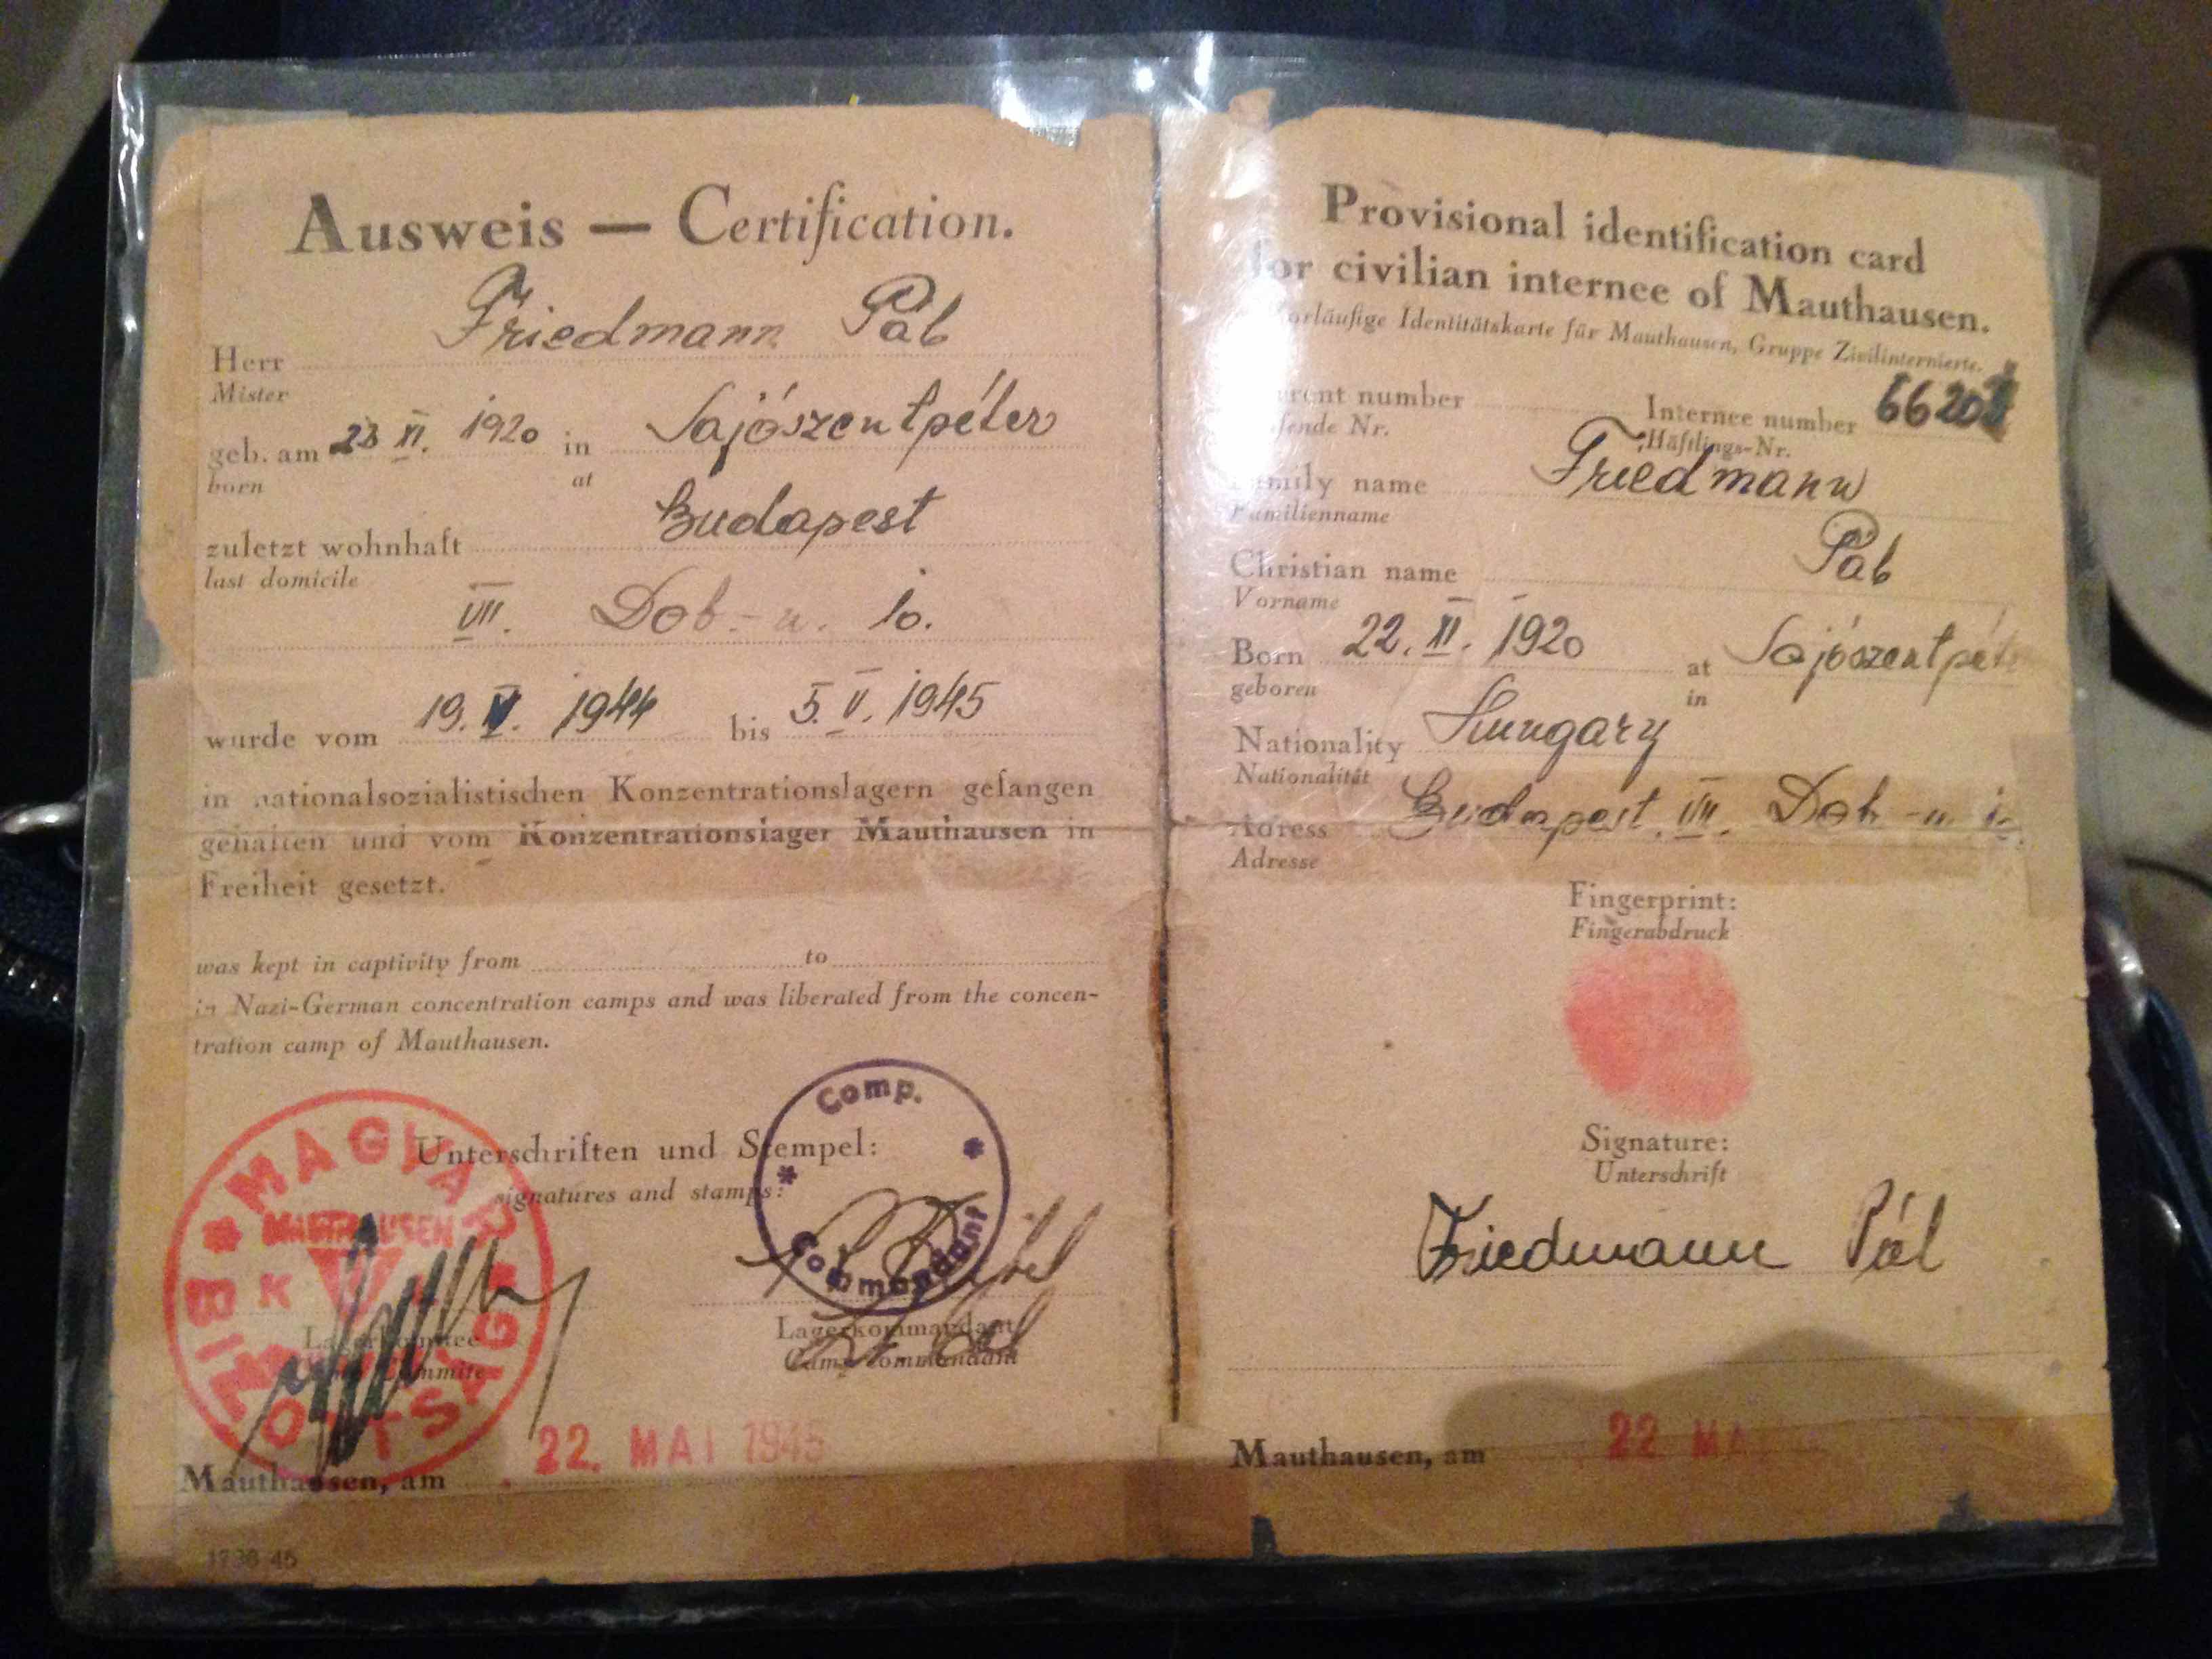 Pál Ferenczi’s Mauthausen certificate. Credit: Judit Izinger